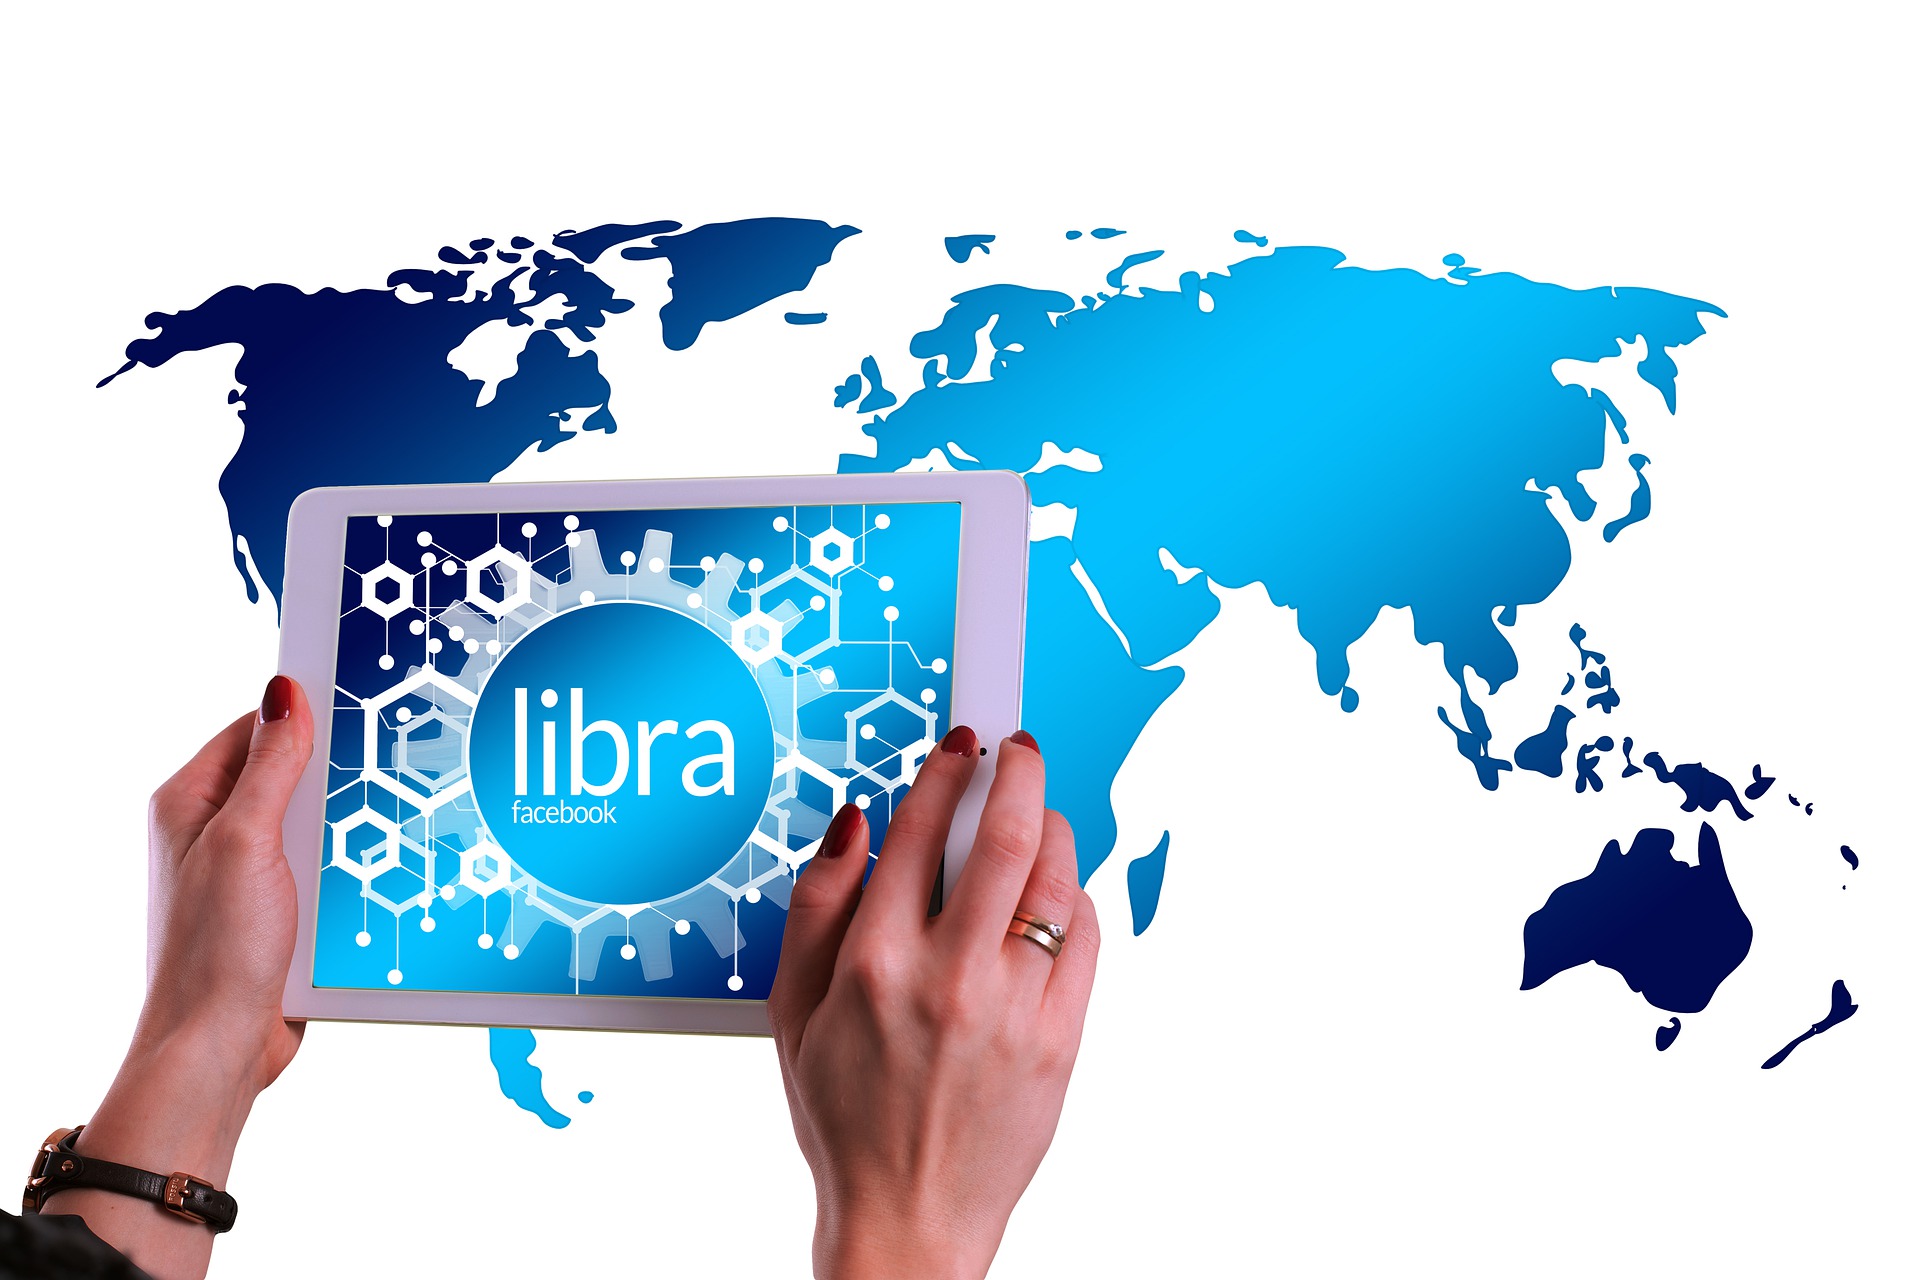 Libra Association Rebrands to Diem Association to Avoid Regulatory Uncertainty